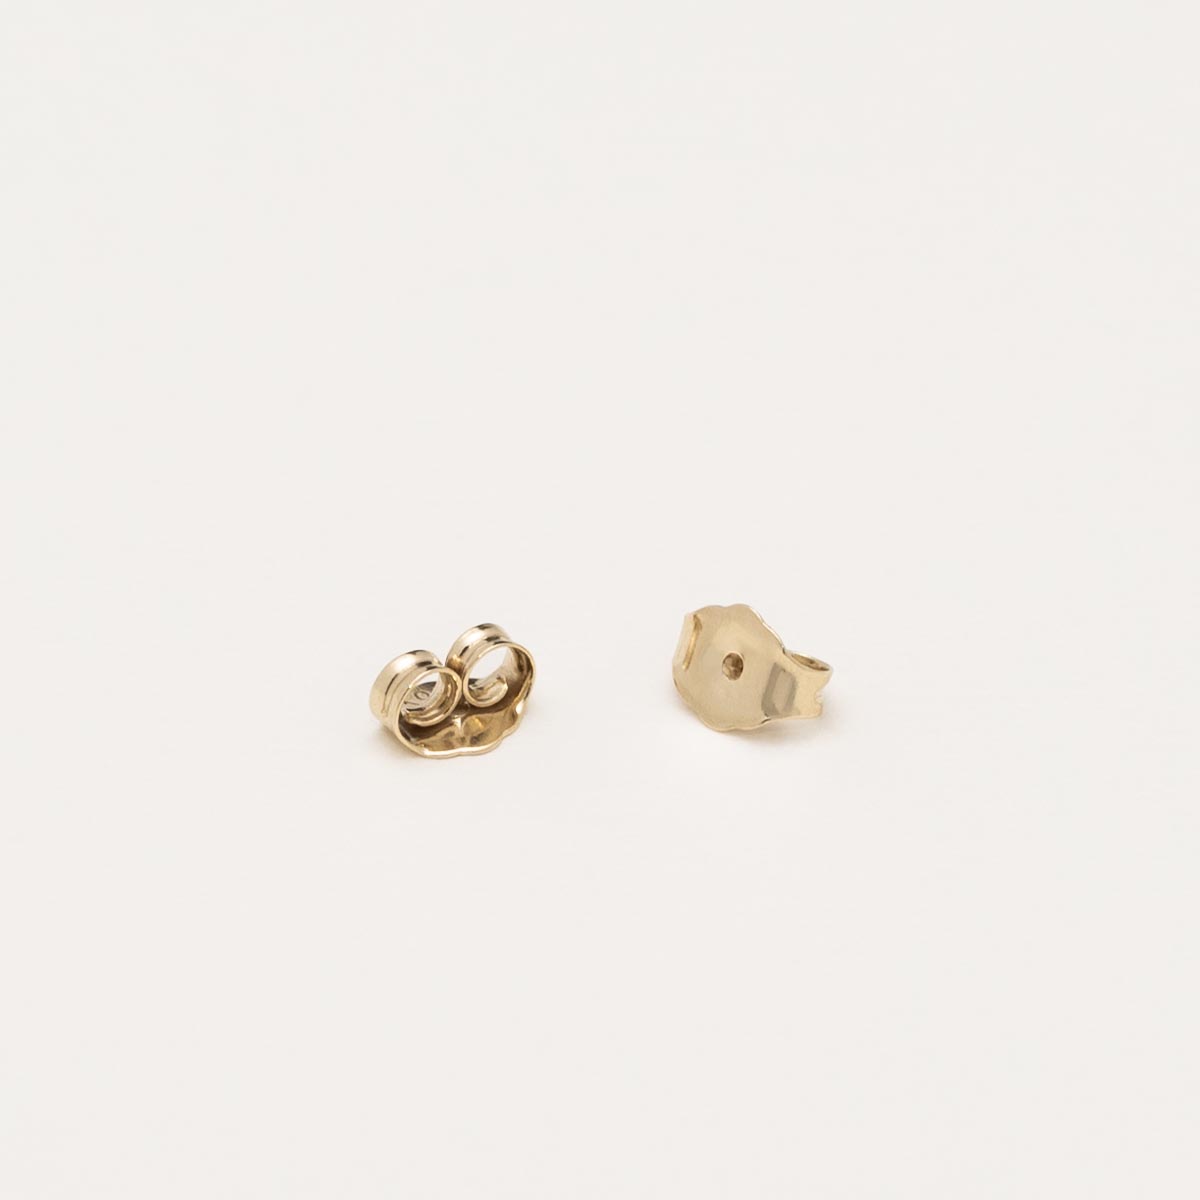 Baguette Diamond Petite Stud Earrings in 10kt Yellow Gold (1/10ct tw)